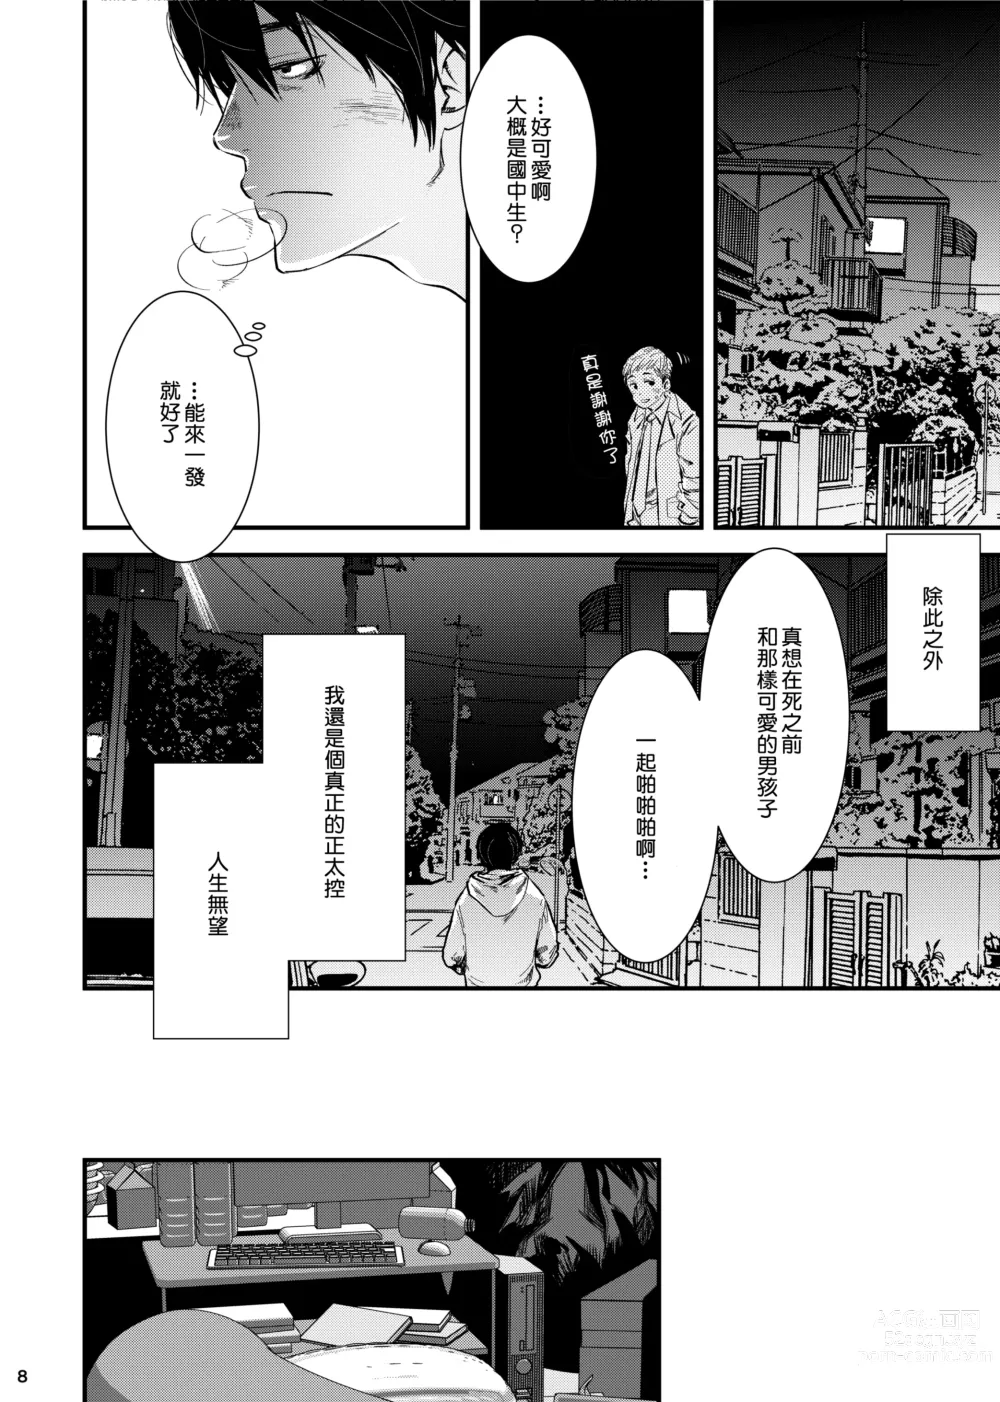 Page 7 of doujinshi SHOTA-CON syndrome